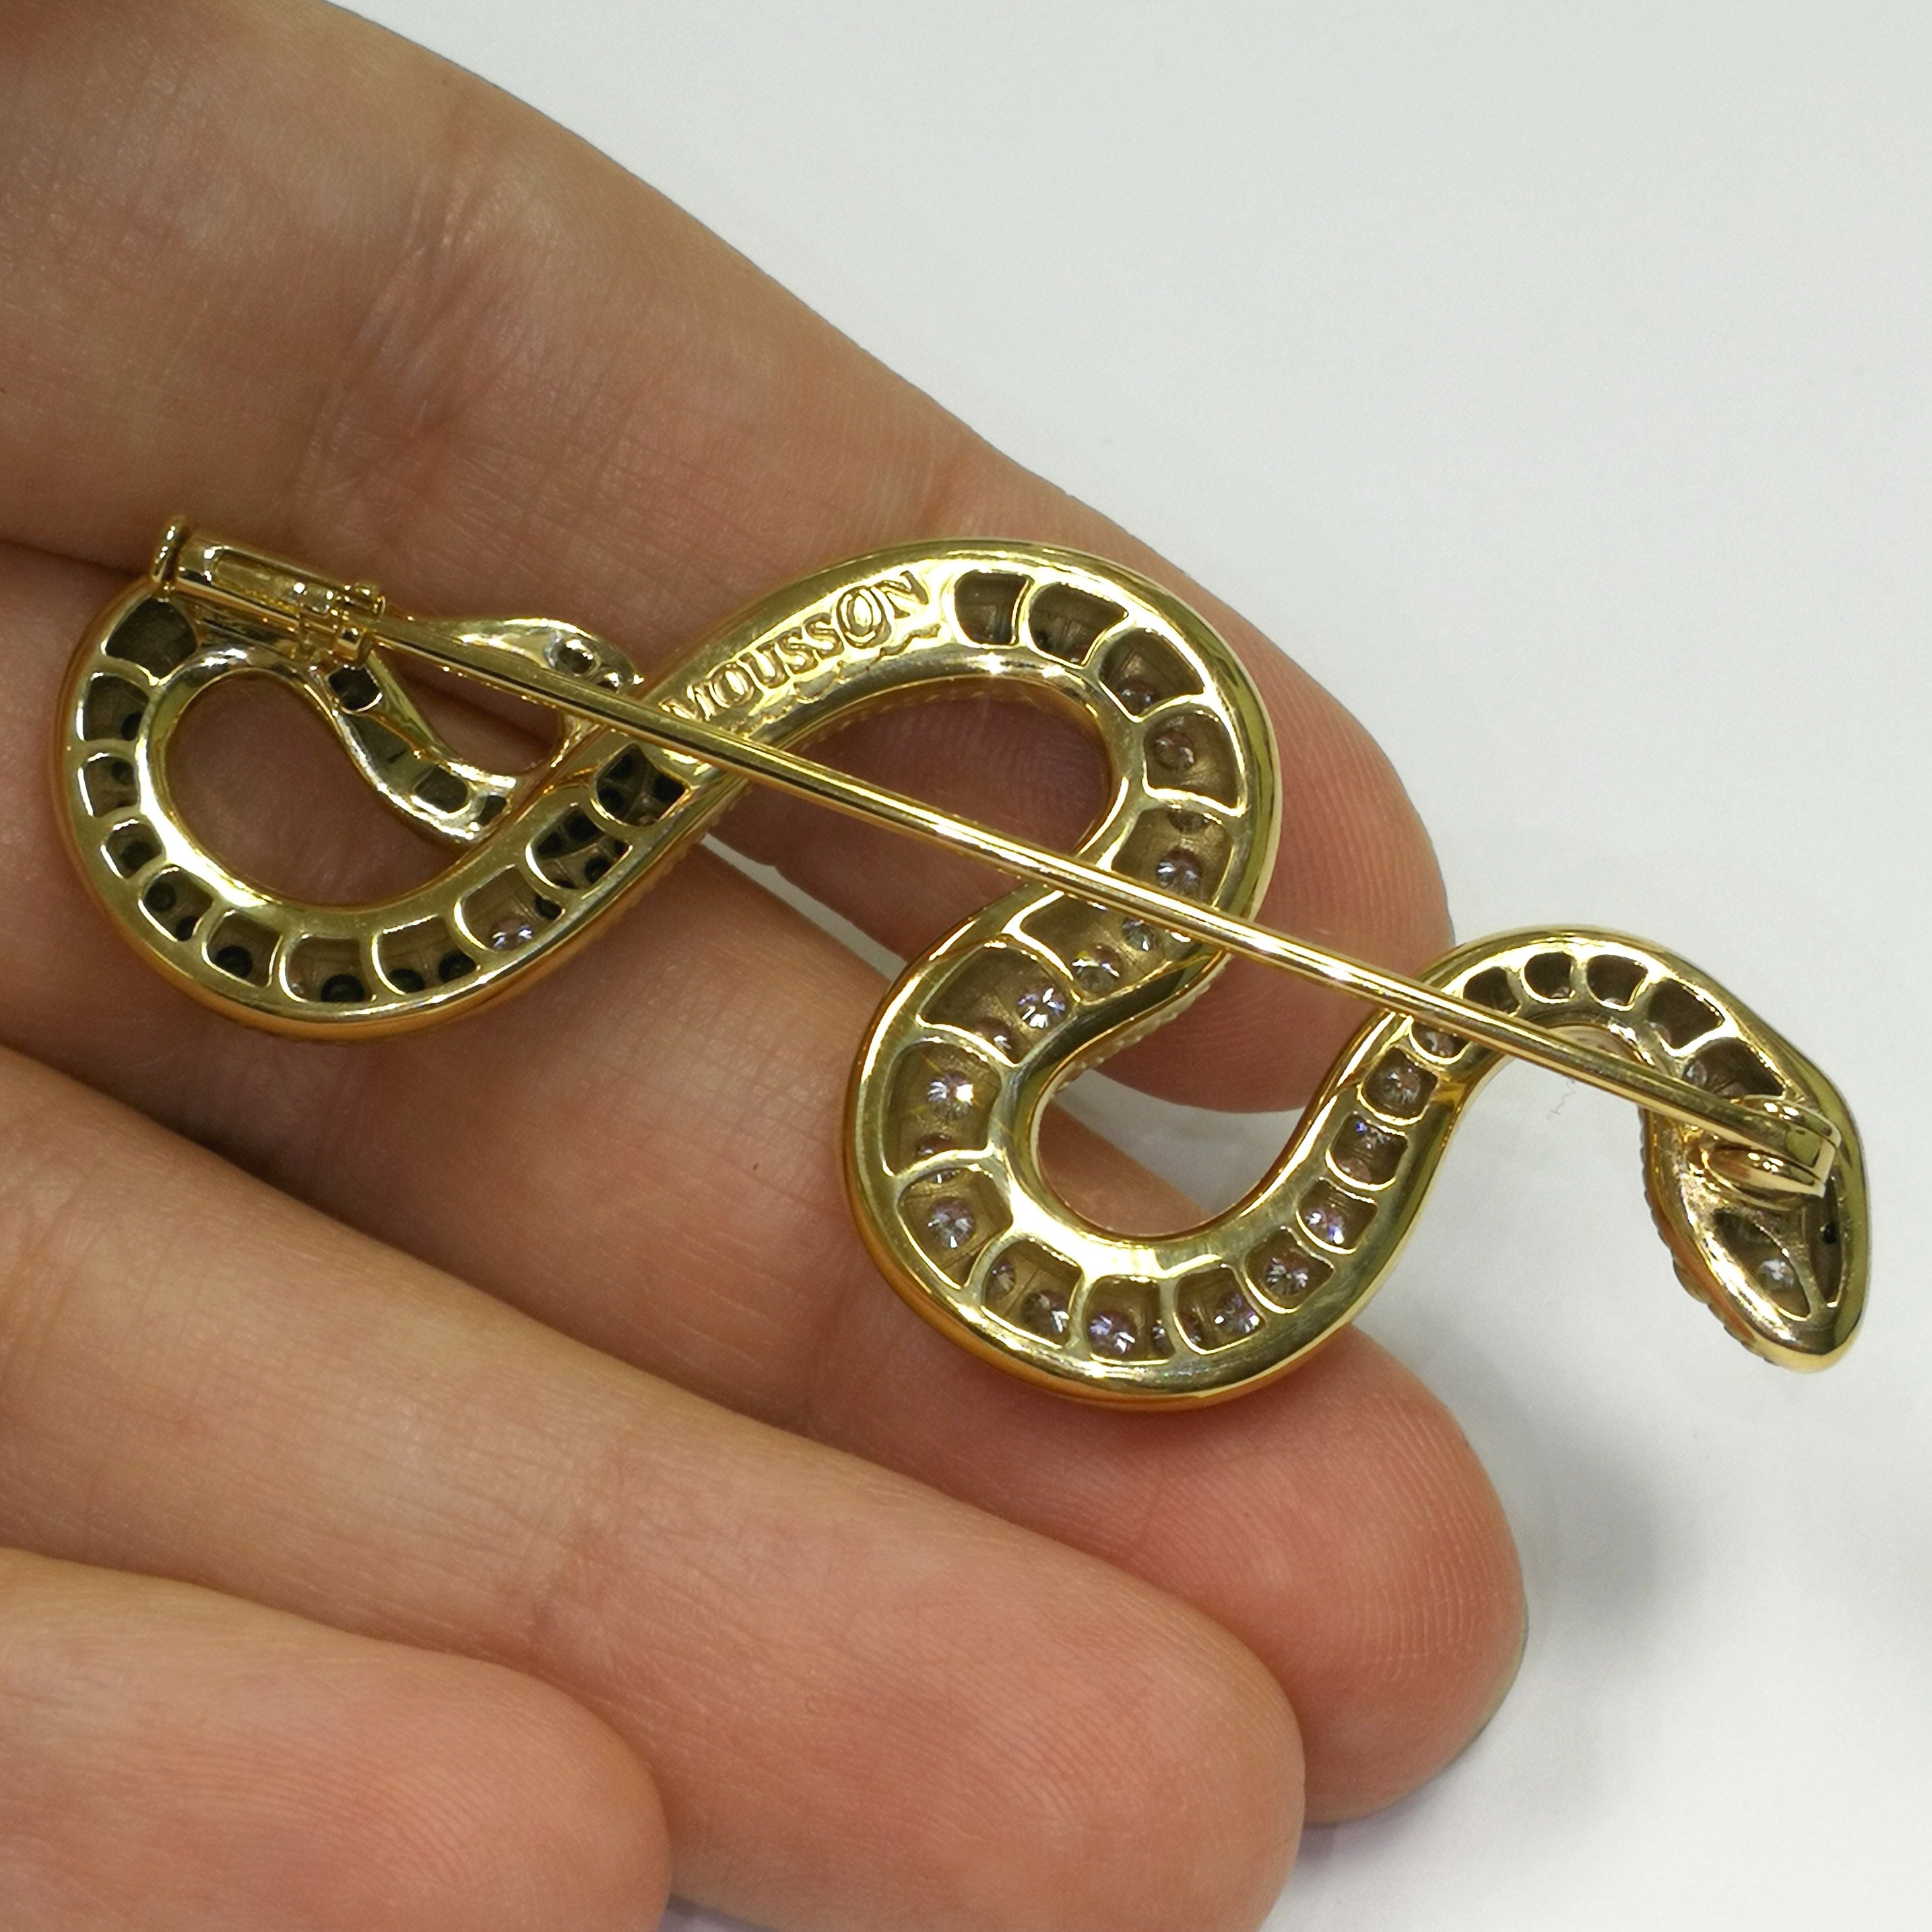 Brs 0188-0, 18K Yellow Gold, Diamonds Snake Brooch